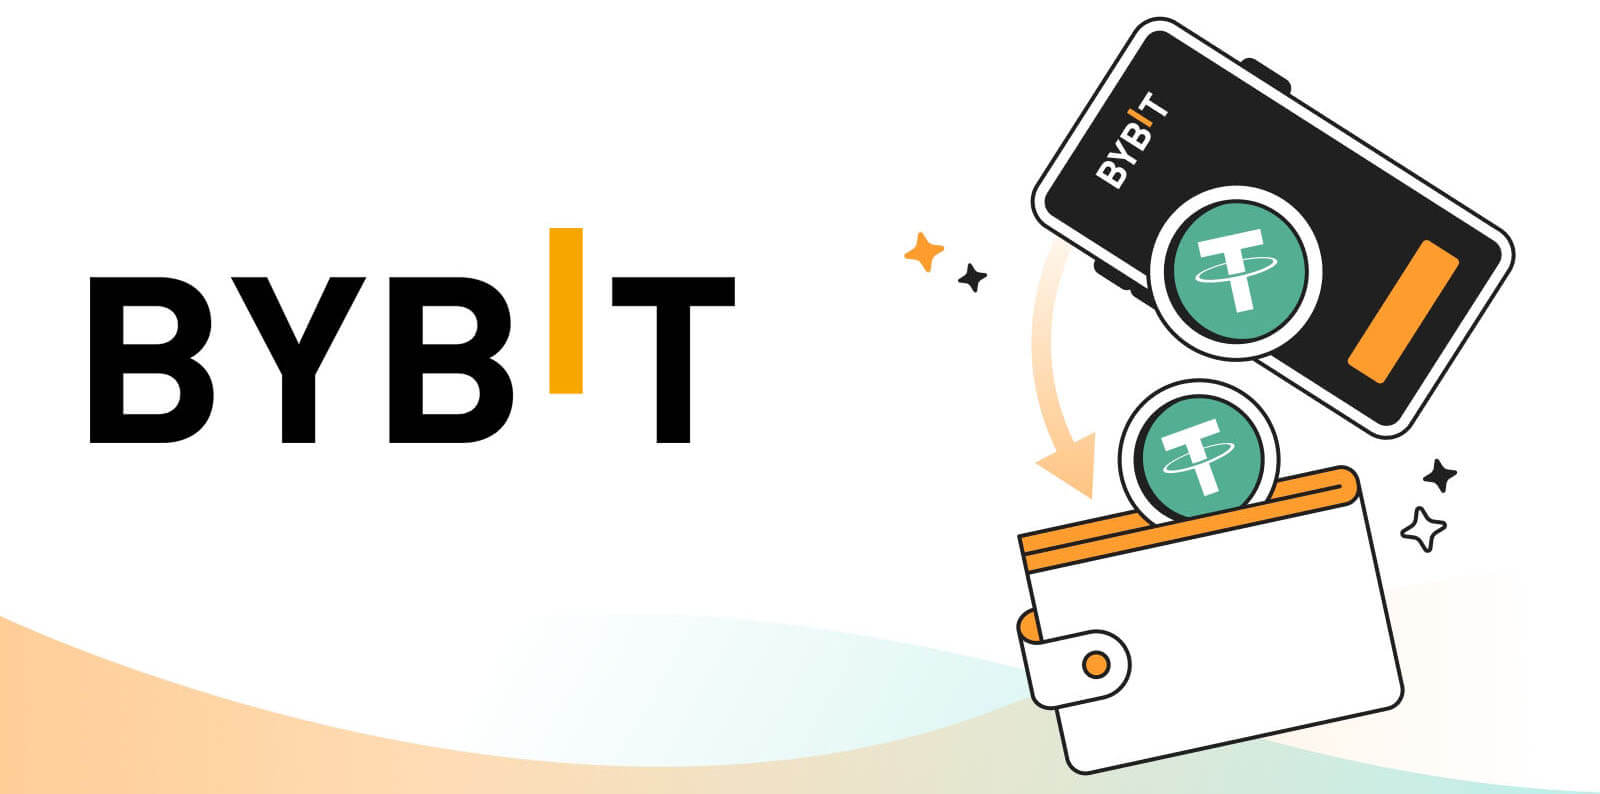 Dipòsit bybit: com dipositar diners i mètodes de pagament